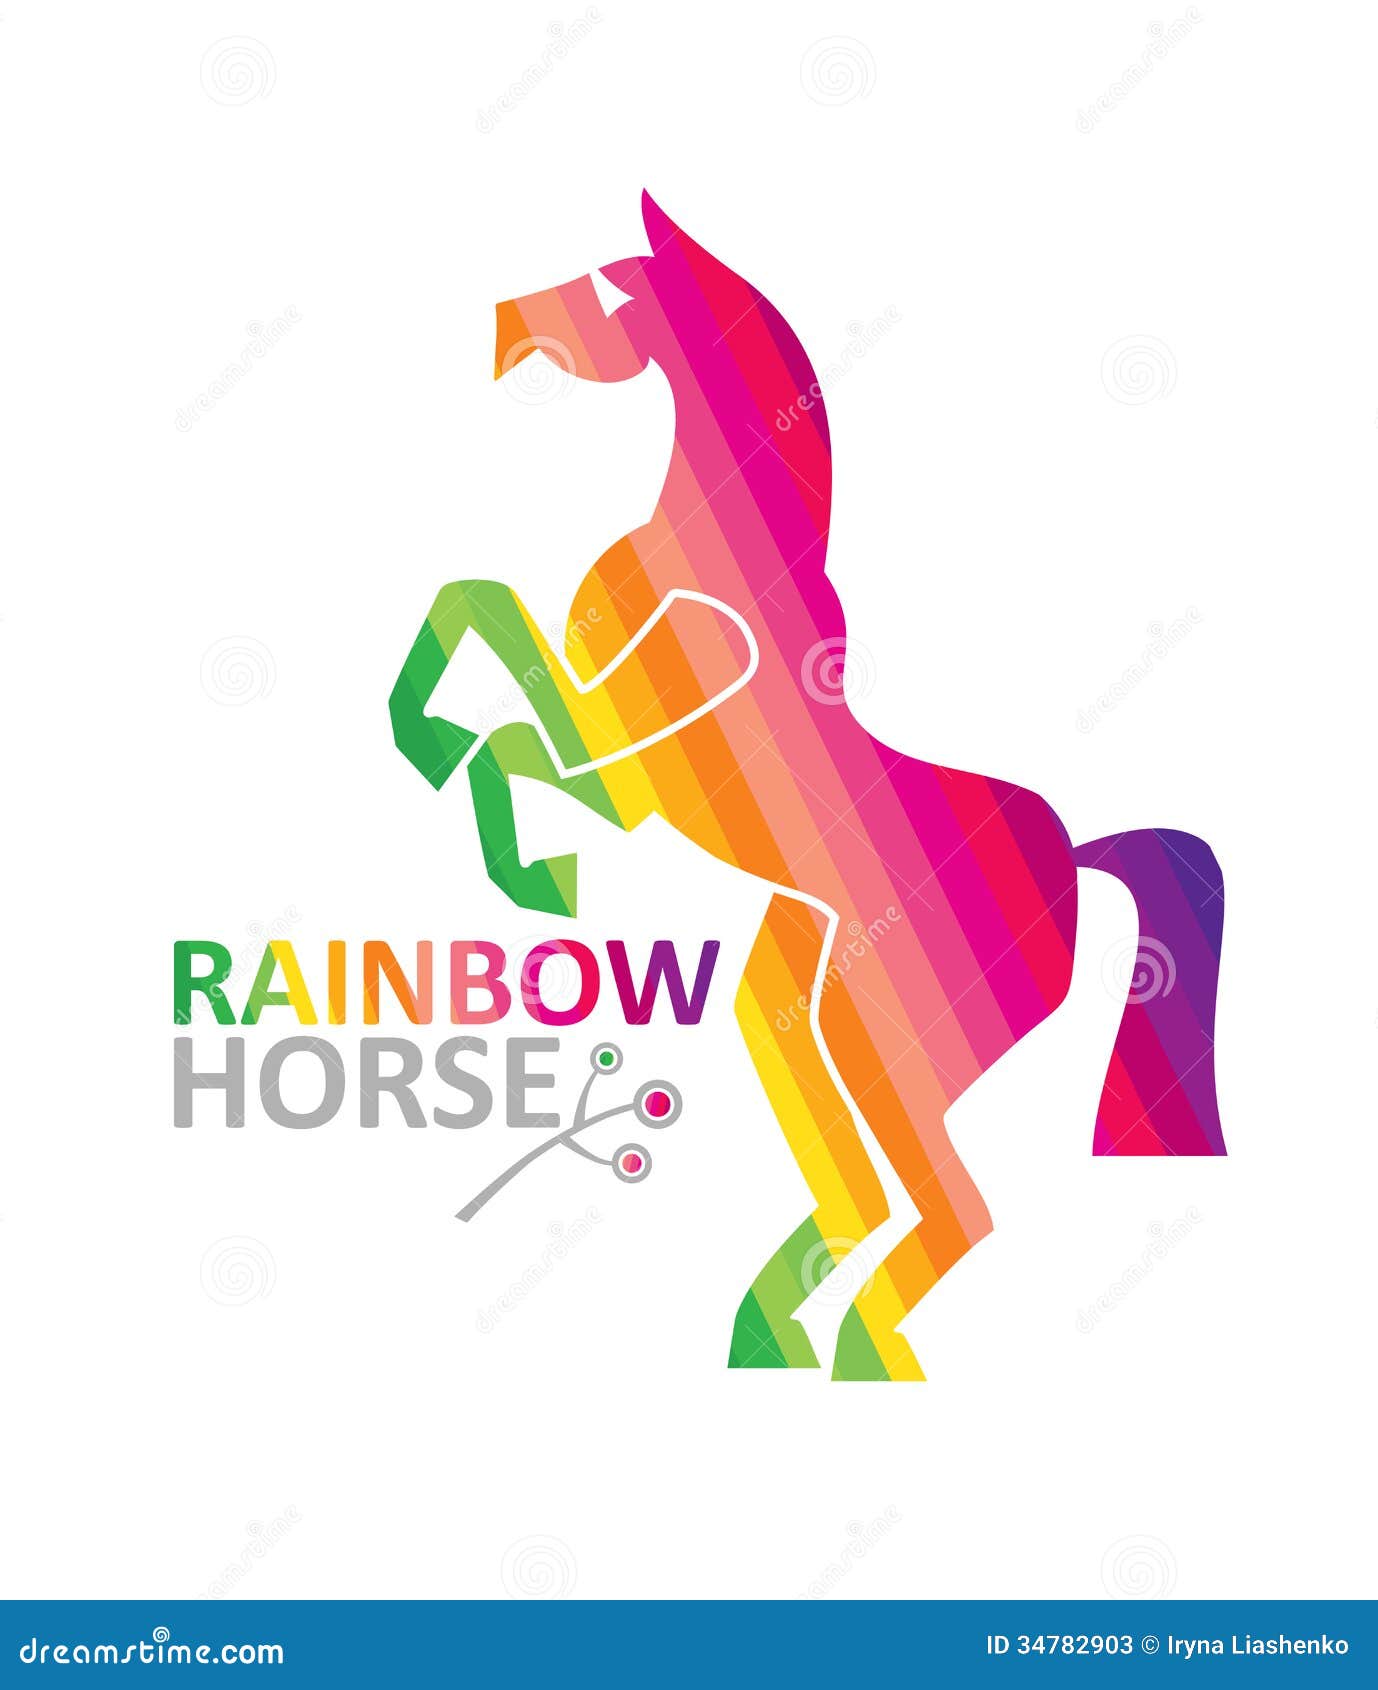 rainbow horse clip art - photo #15